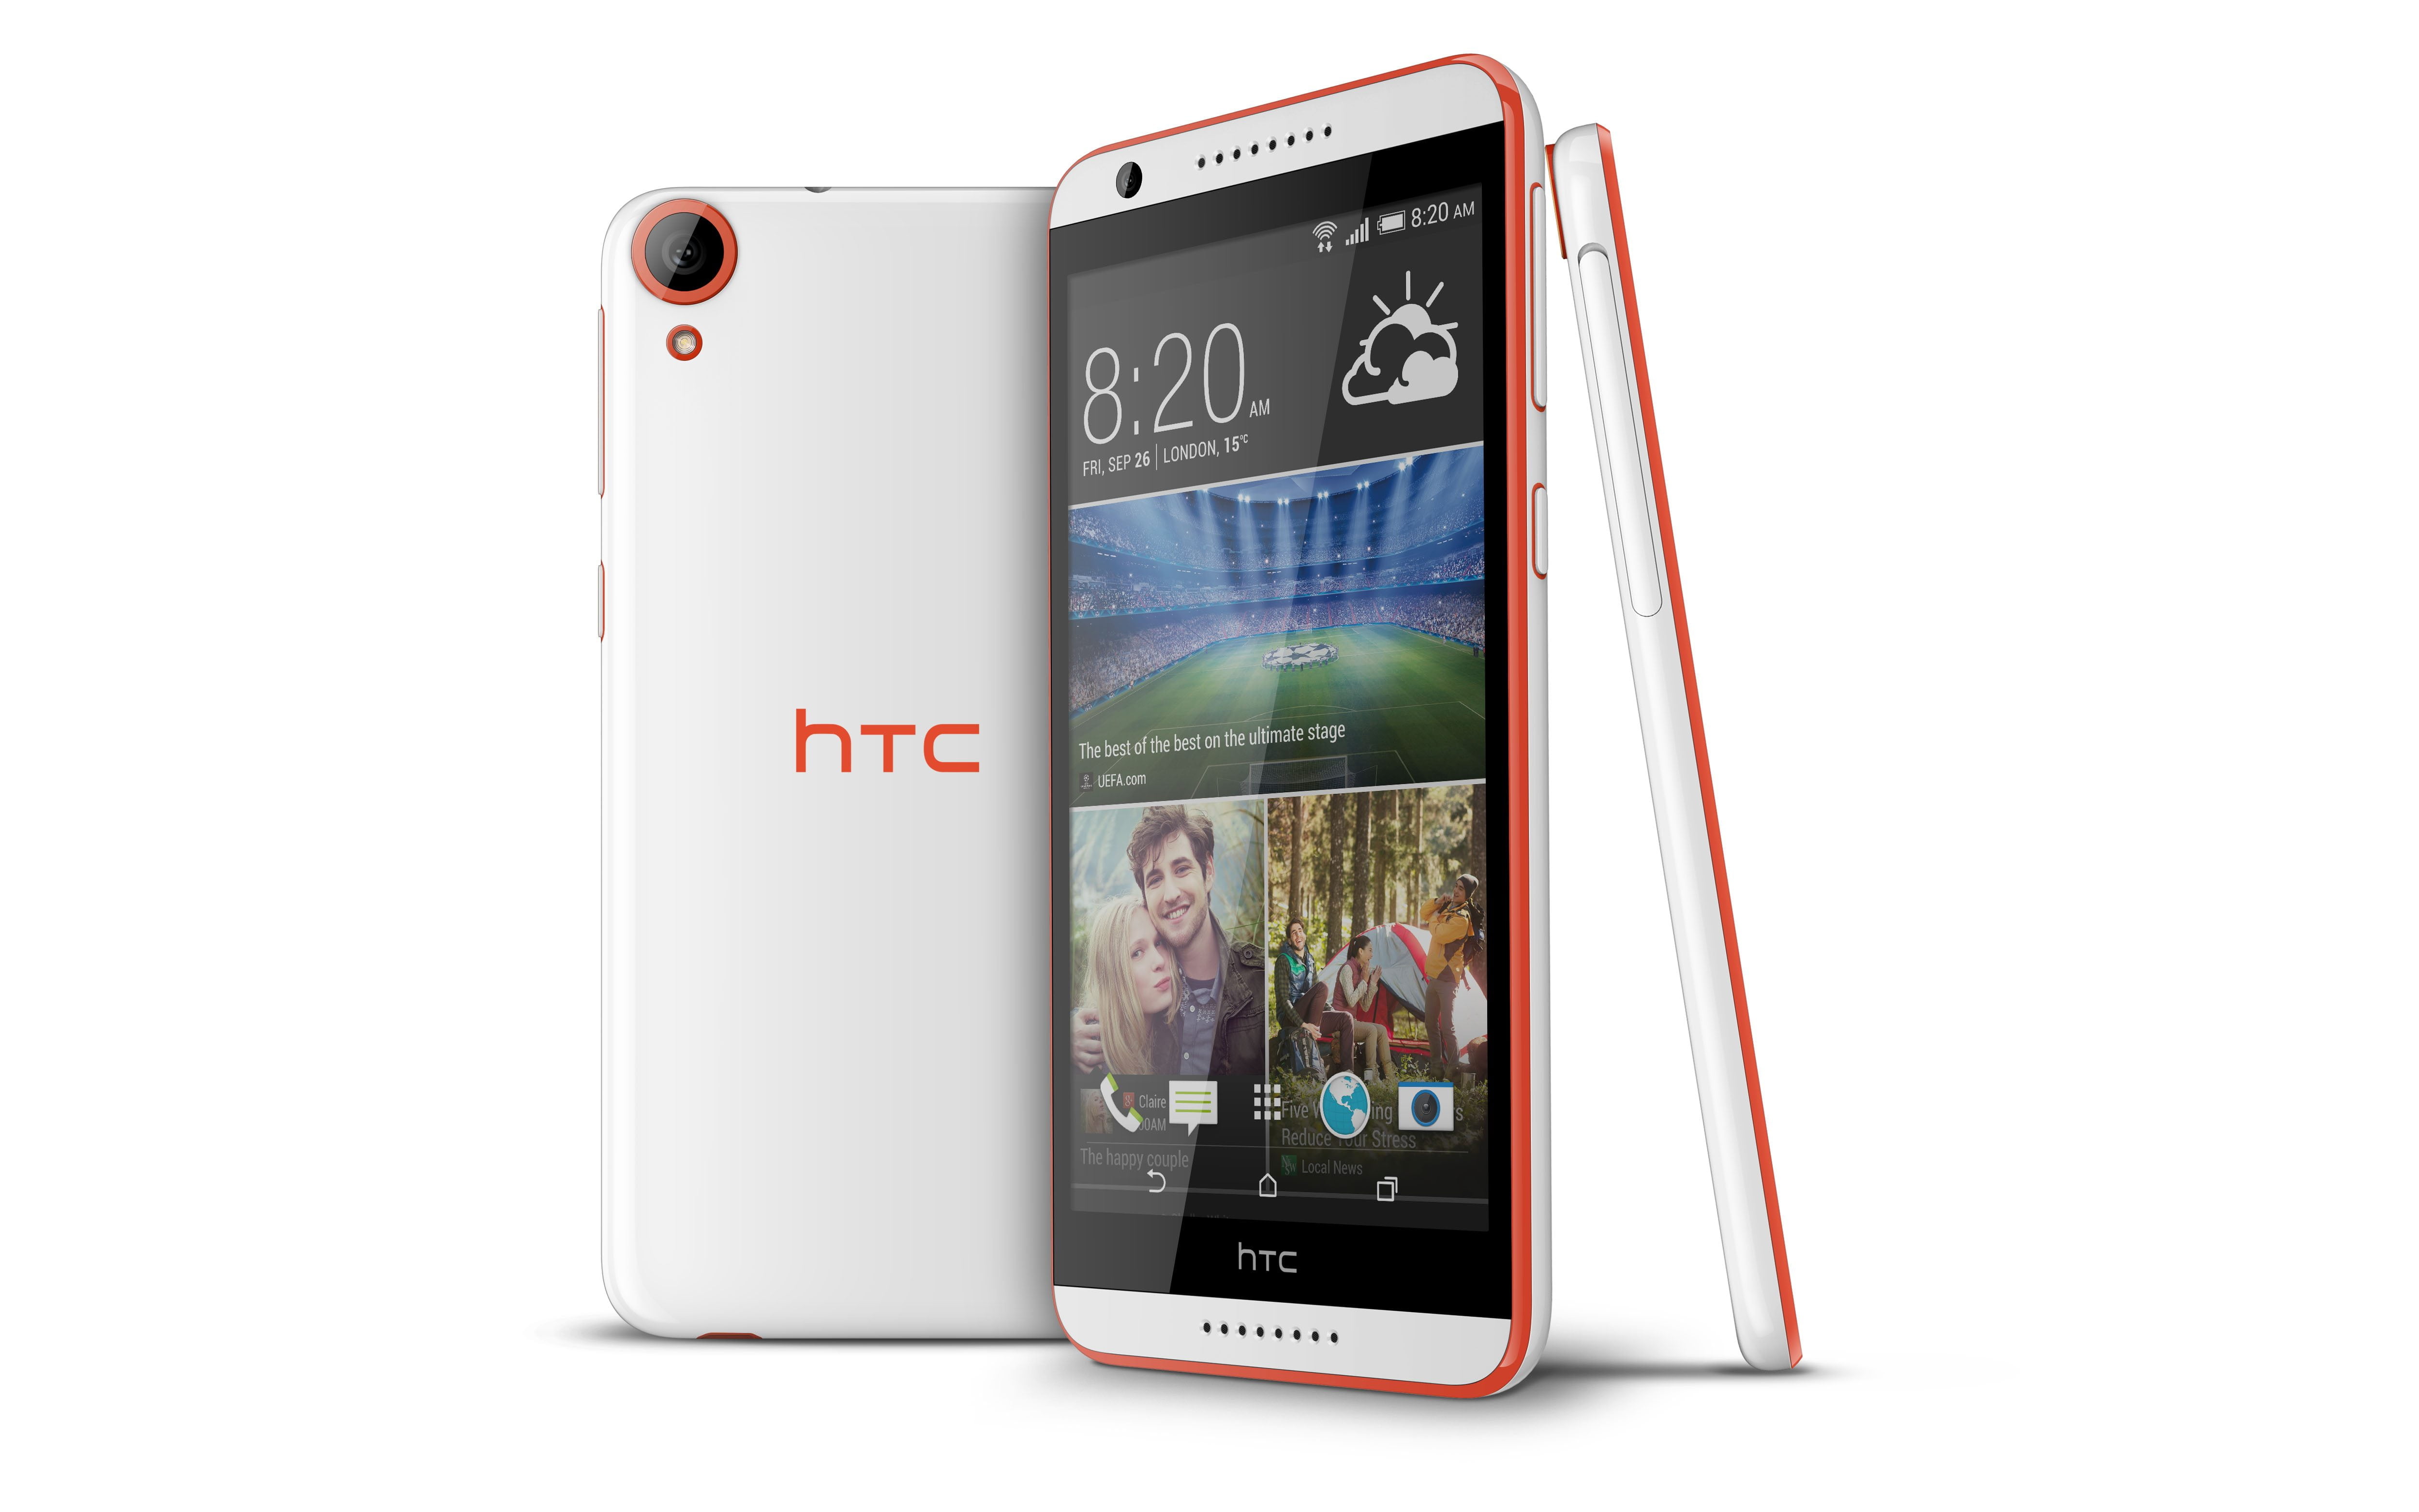 HTC Desire 820_Tangerine White